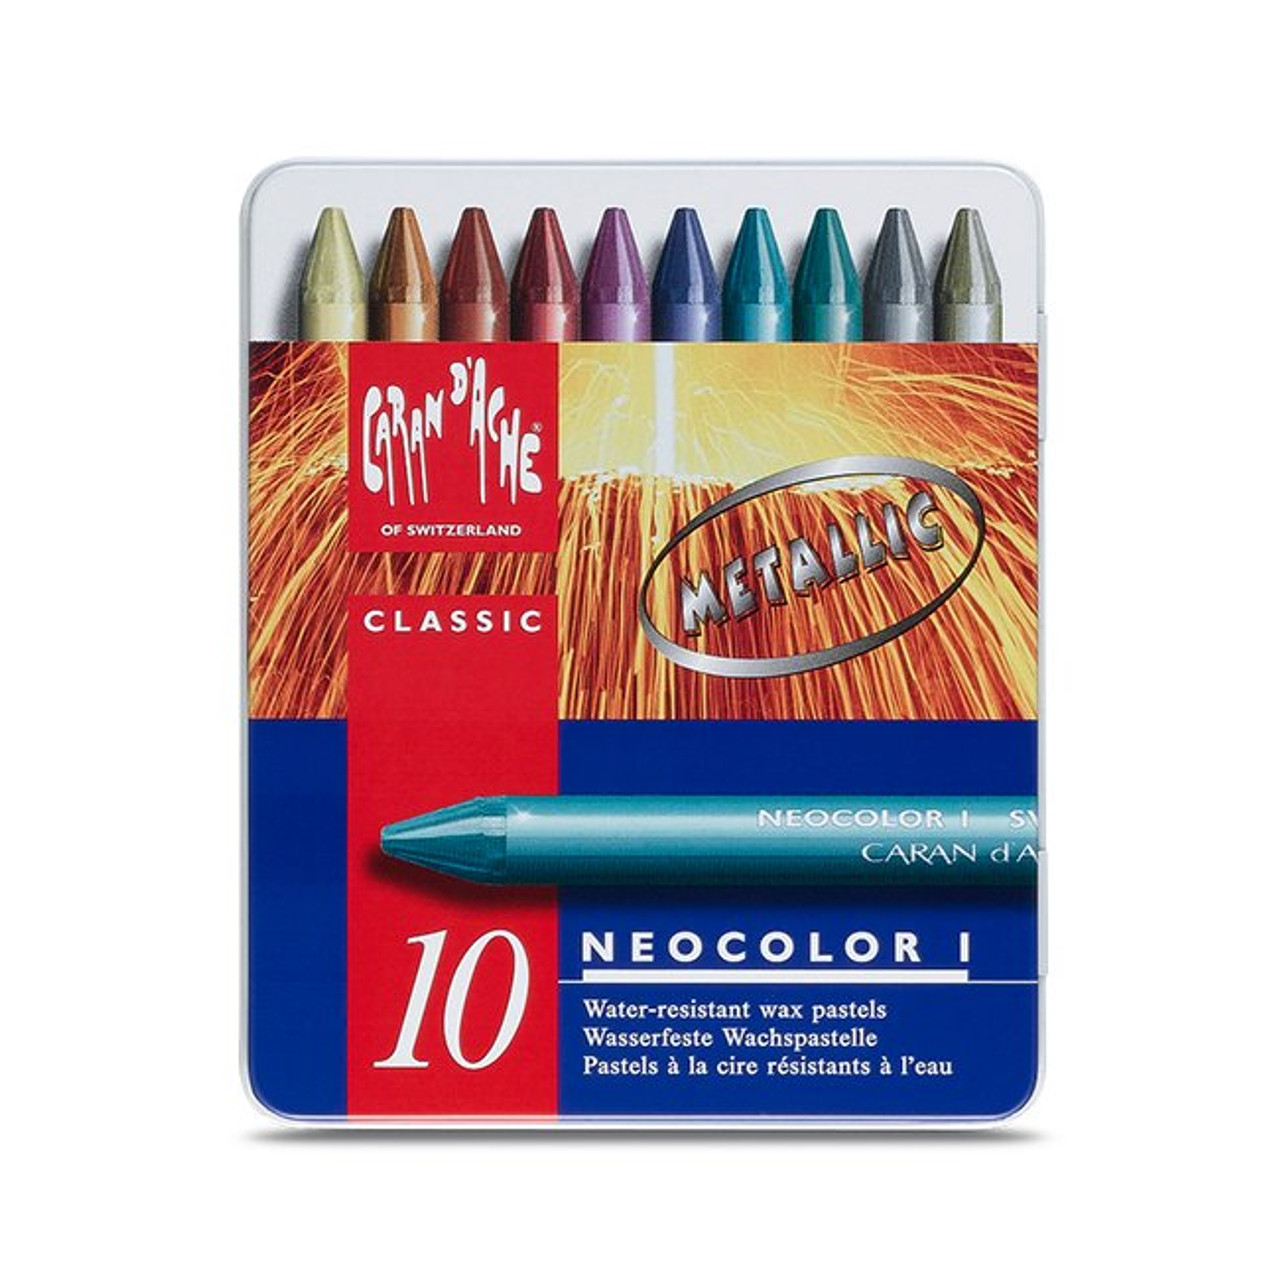 Caran D'Ache Classic Neocolor I, 10 Assorted Metallic Colors - Artist &  Craftsman Supply